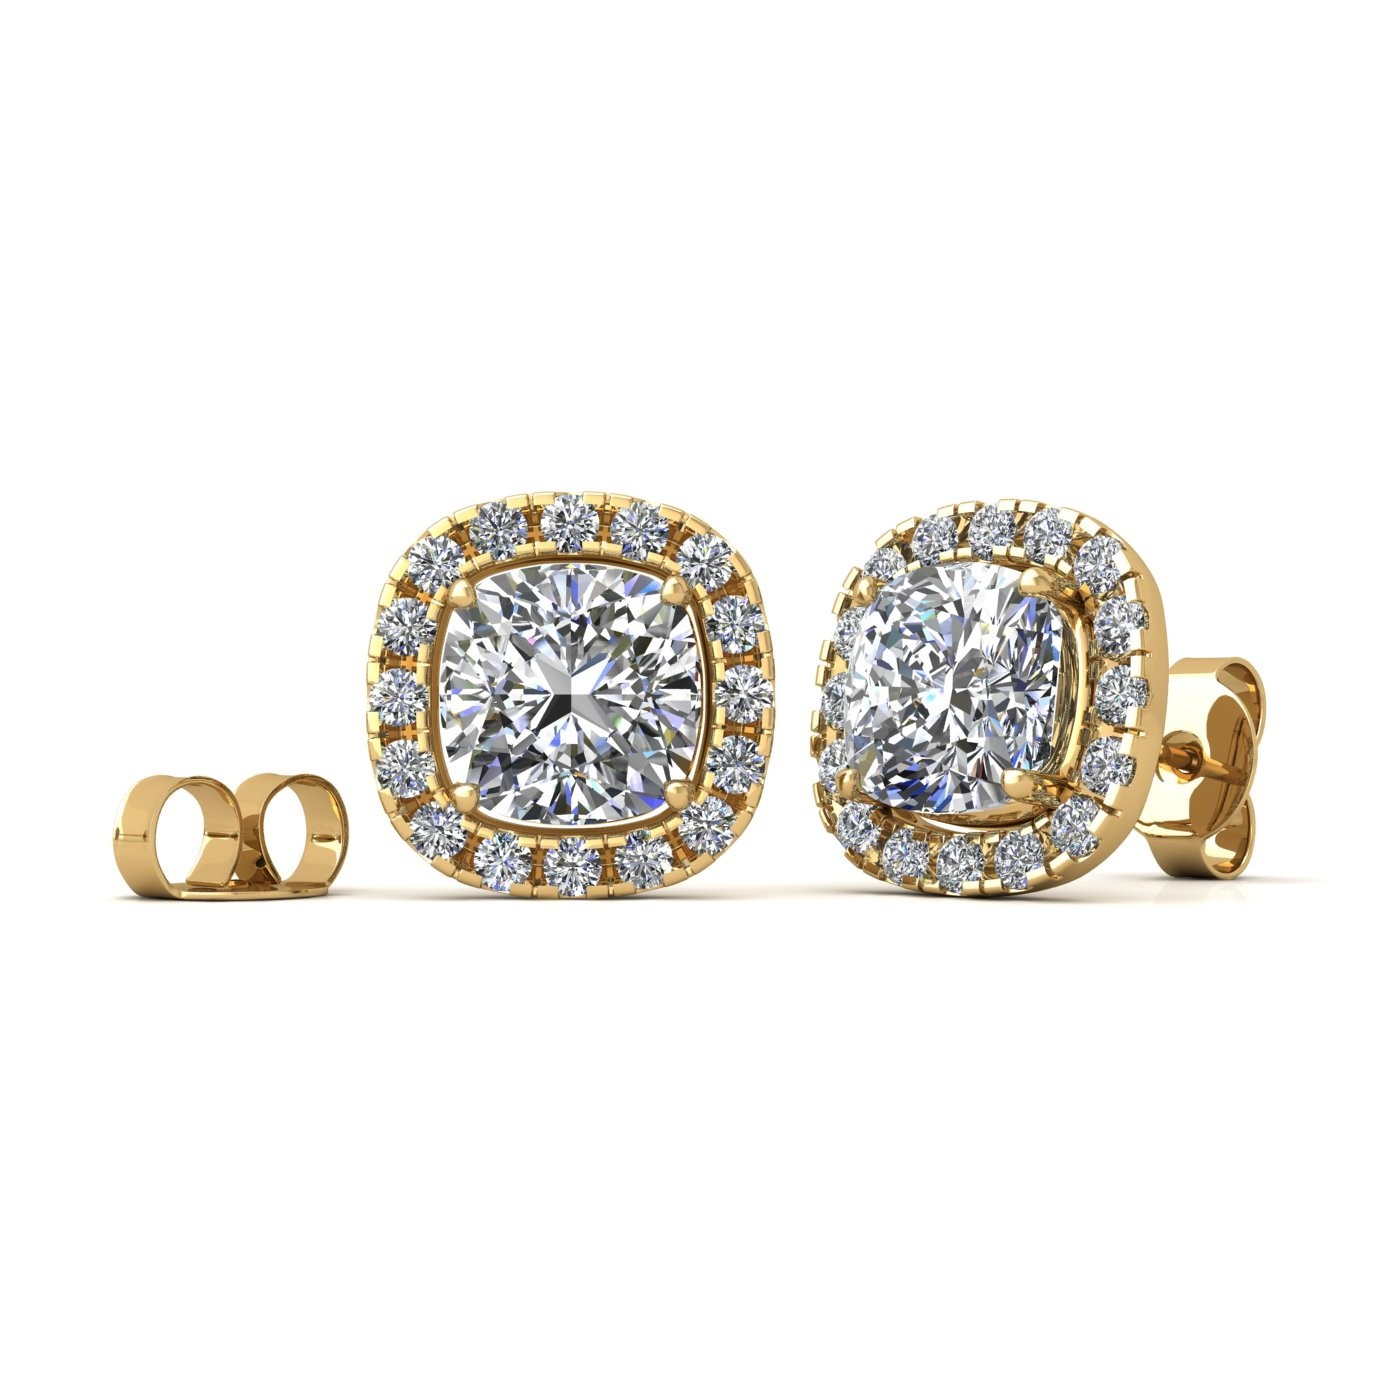 18k yellow gold 1,0 ct each (2,0 tcw) 4 prongs cushion shape diamond earrings with diamond pavÉ set halo